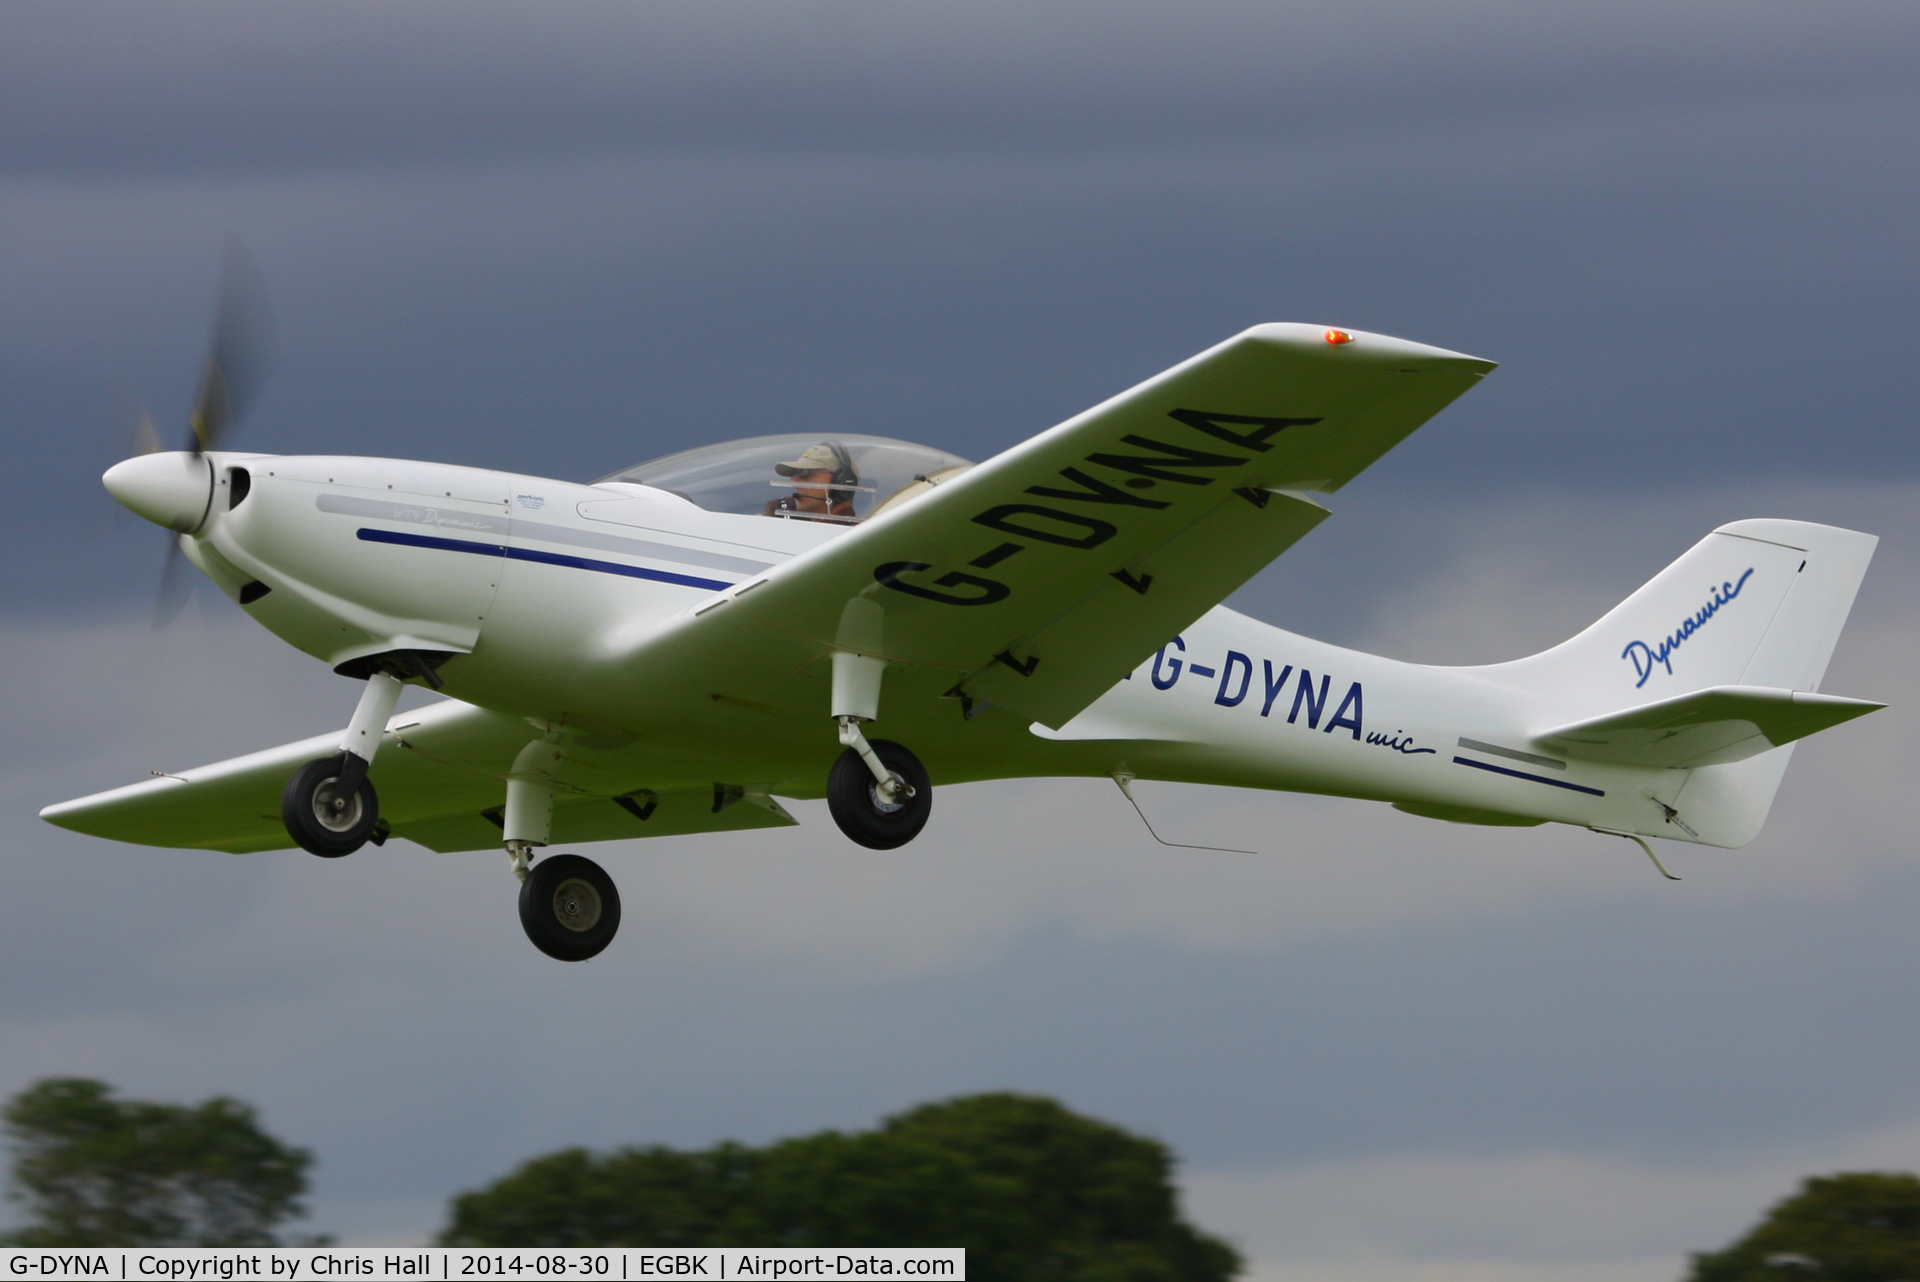 G-DYNA, 2006 Aerospool WT-9 Dynamic C/N DY135/2006, at the LAA Rally 2014, Sywell